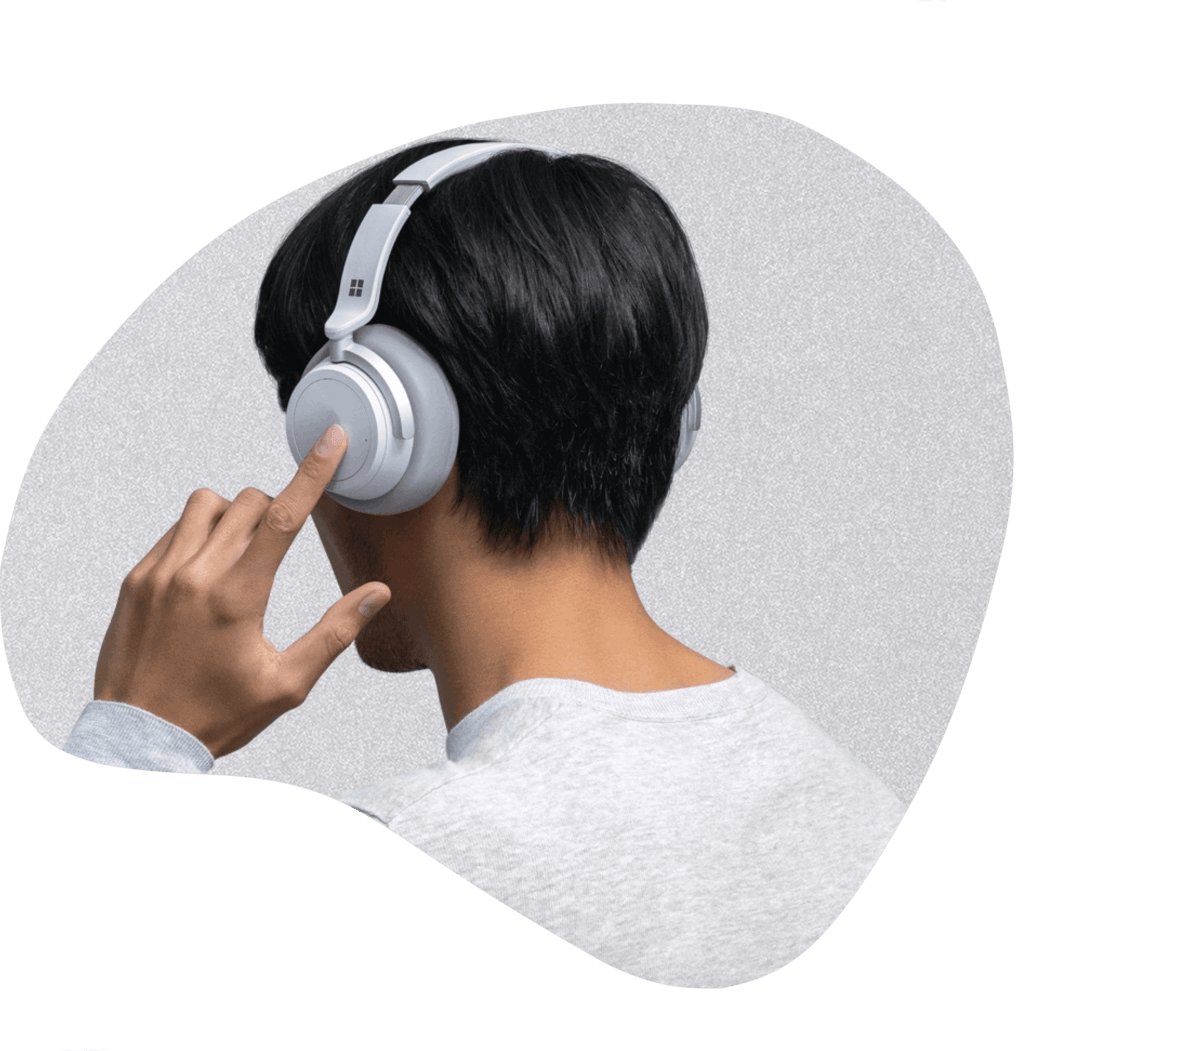 guy on his headphones listening to music